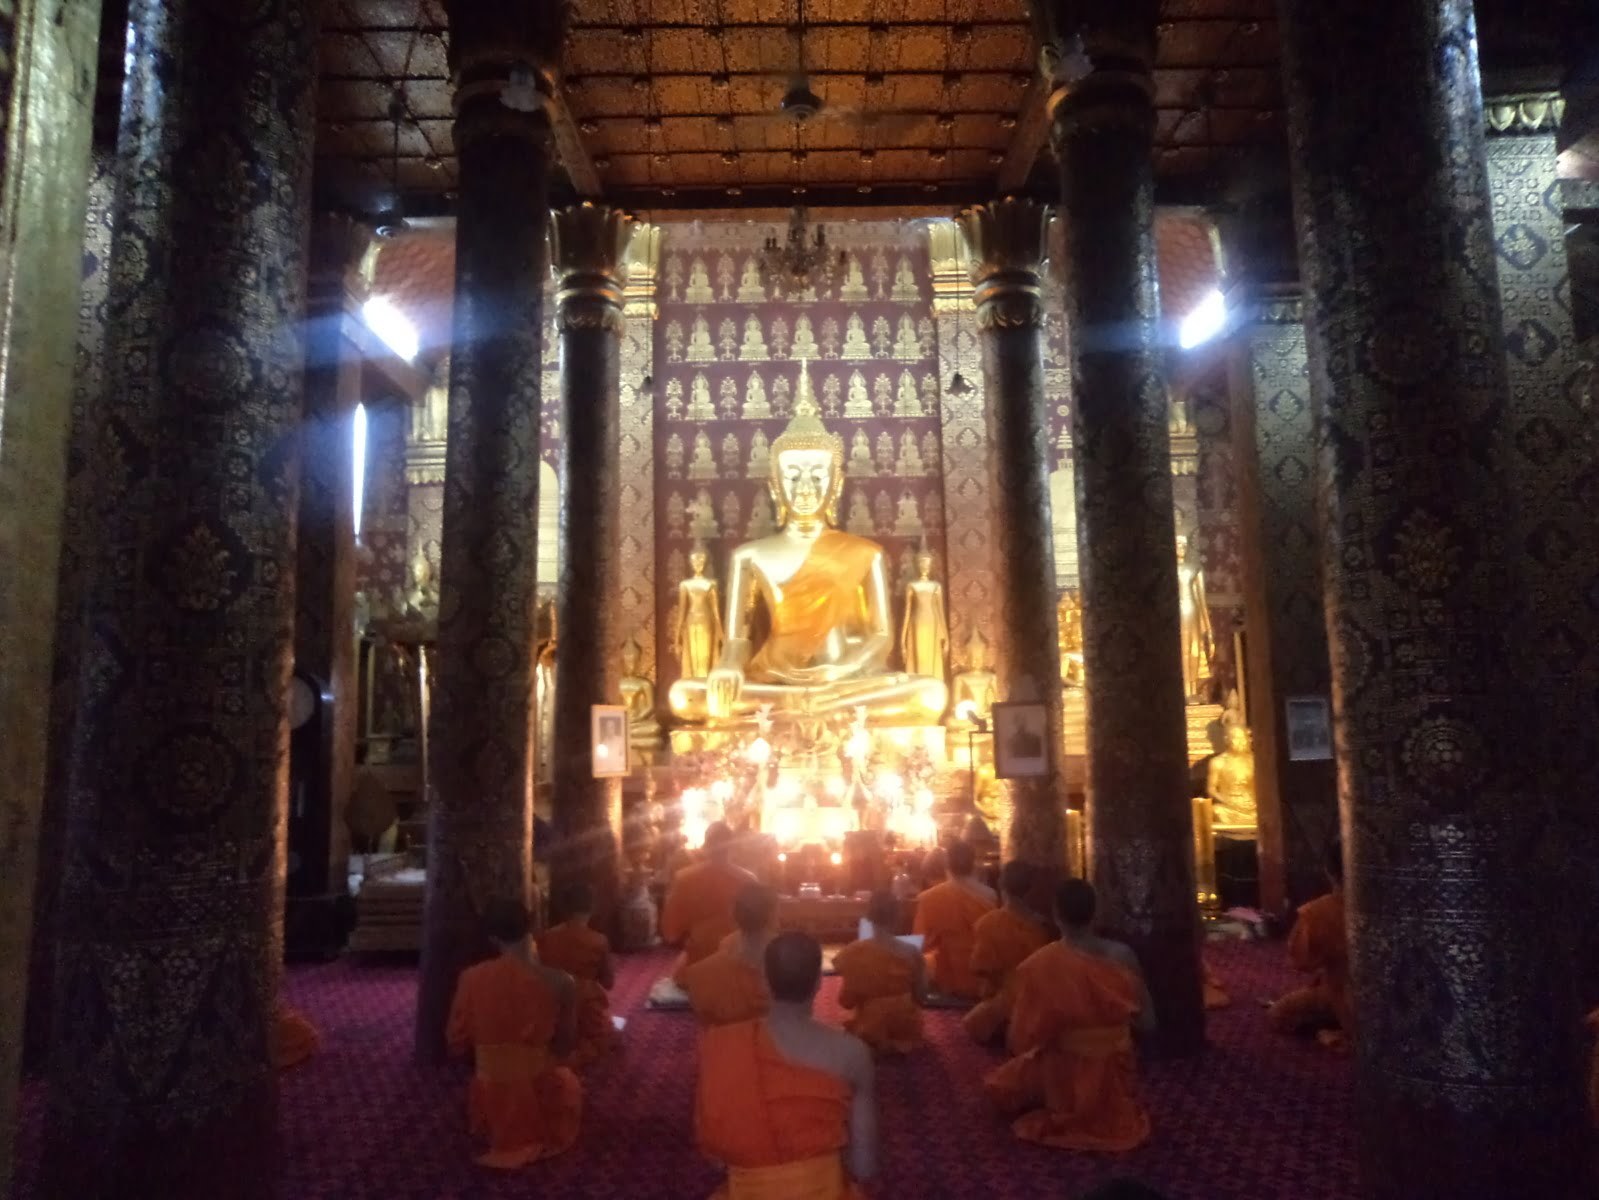 Monges rezam no templo ao pé do Mount Phousi - Luang Prabang, Laos